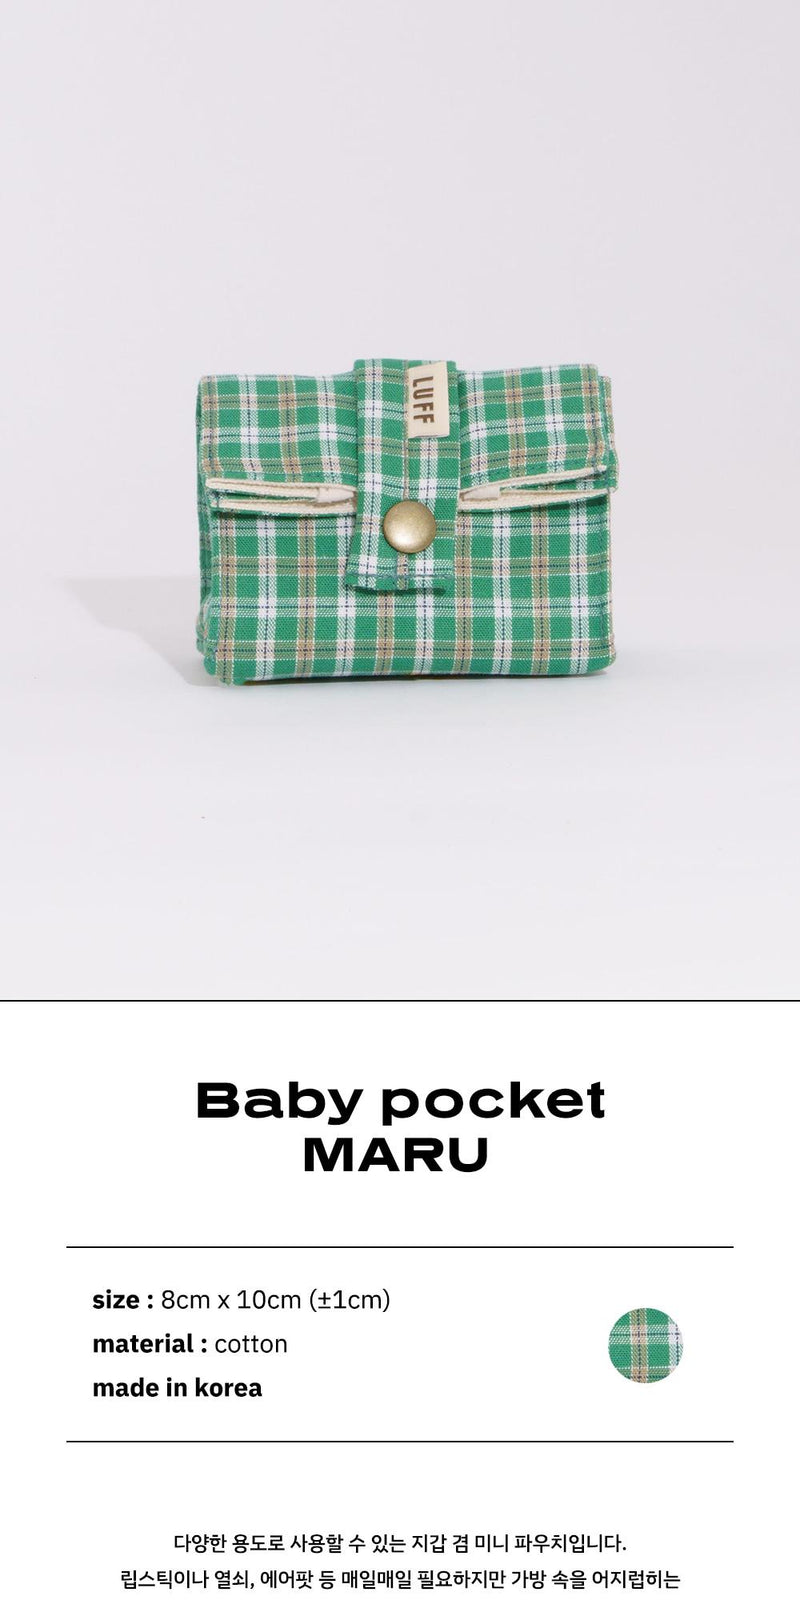 baby pocket - maru